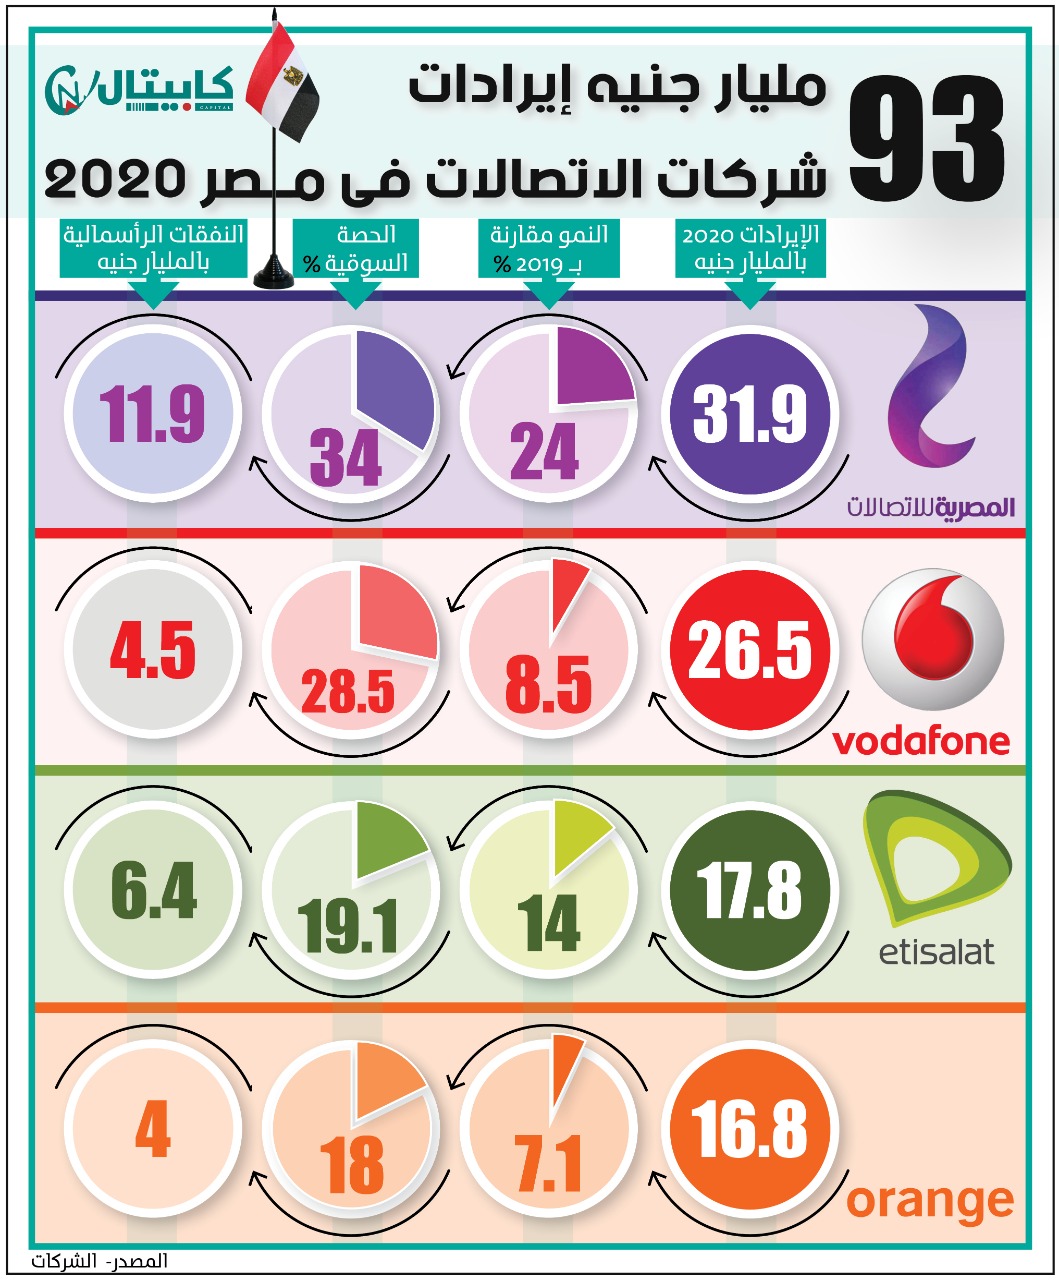 انفوجراف.. 93 مليار جنيه إيرادات شركات الاتصالات فى مصر عام 2020